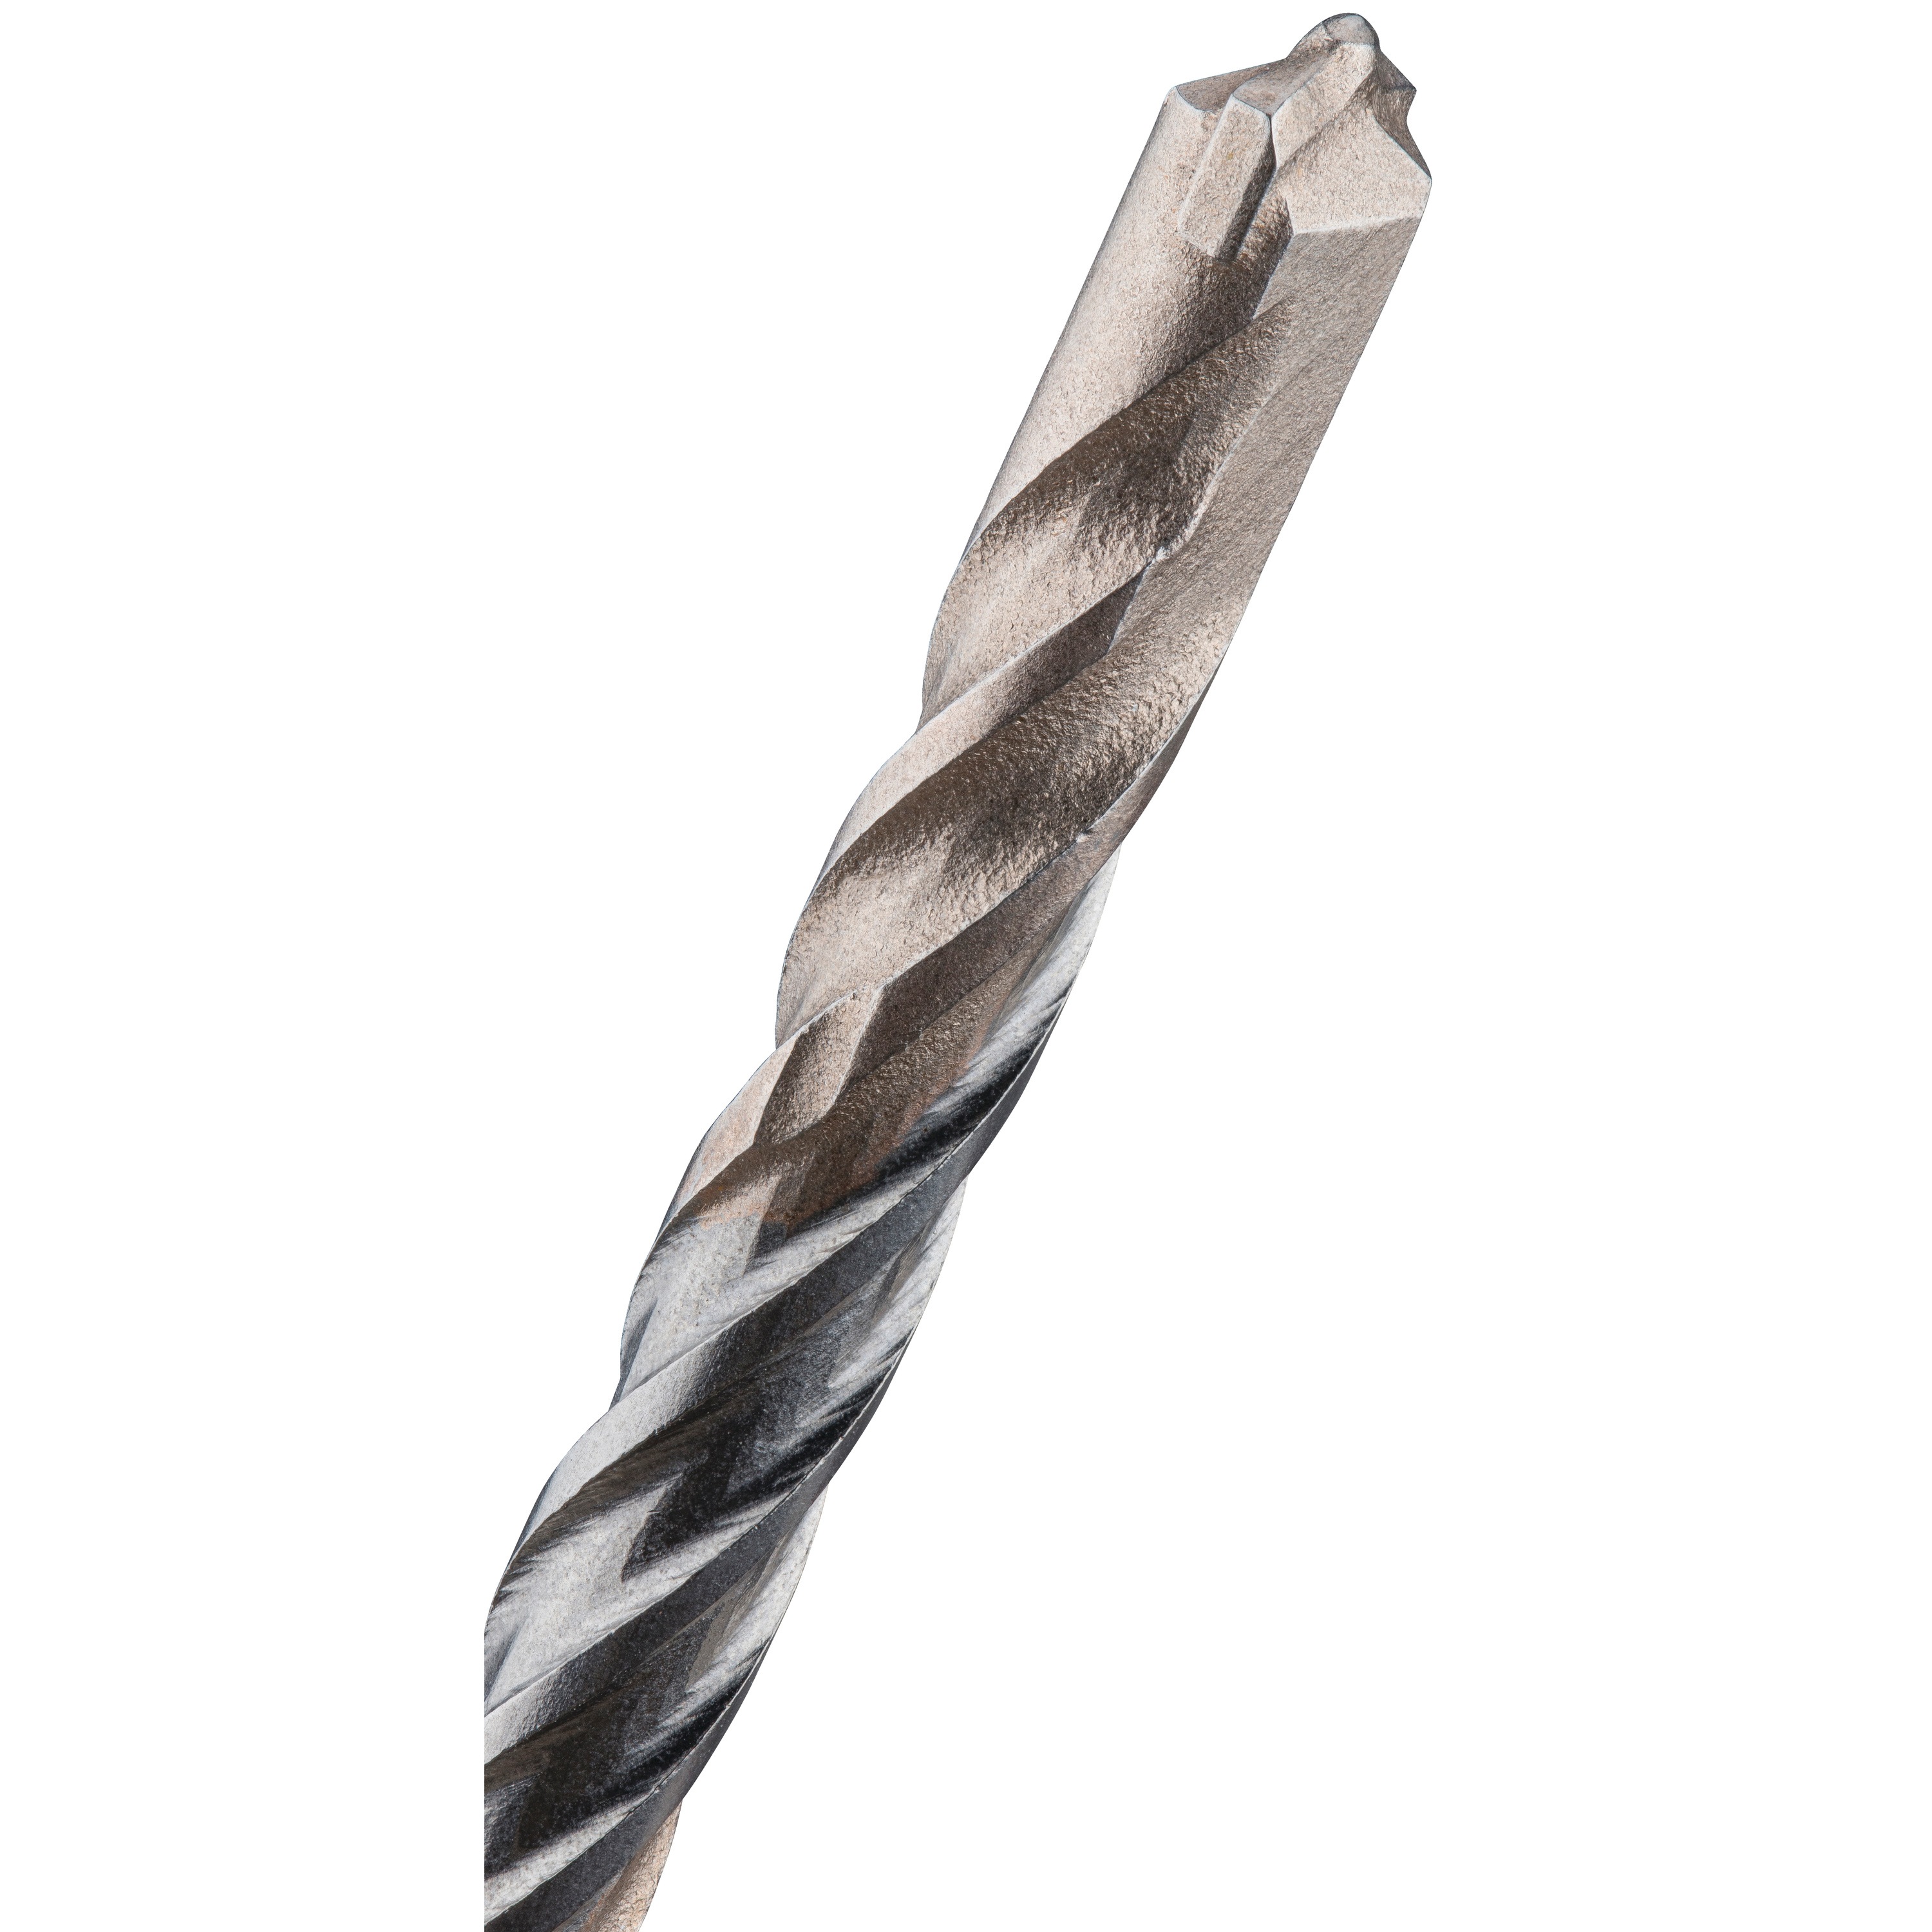 SDS Plus 2 Cutter Drill Bit featuring 2 sharp cutting edges with rock carbide tip.